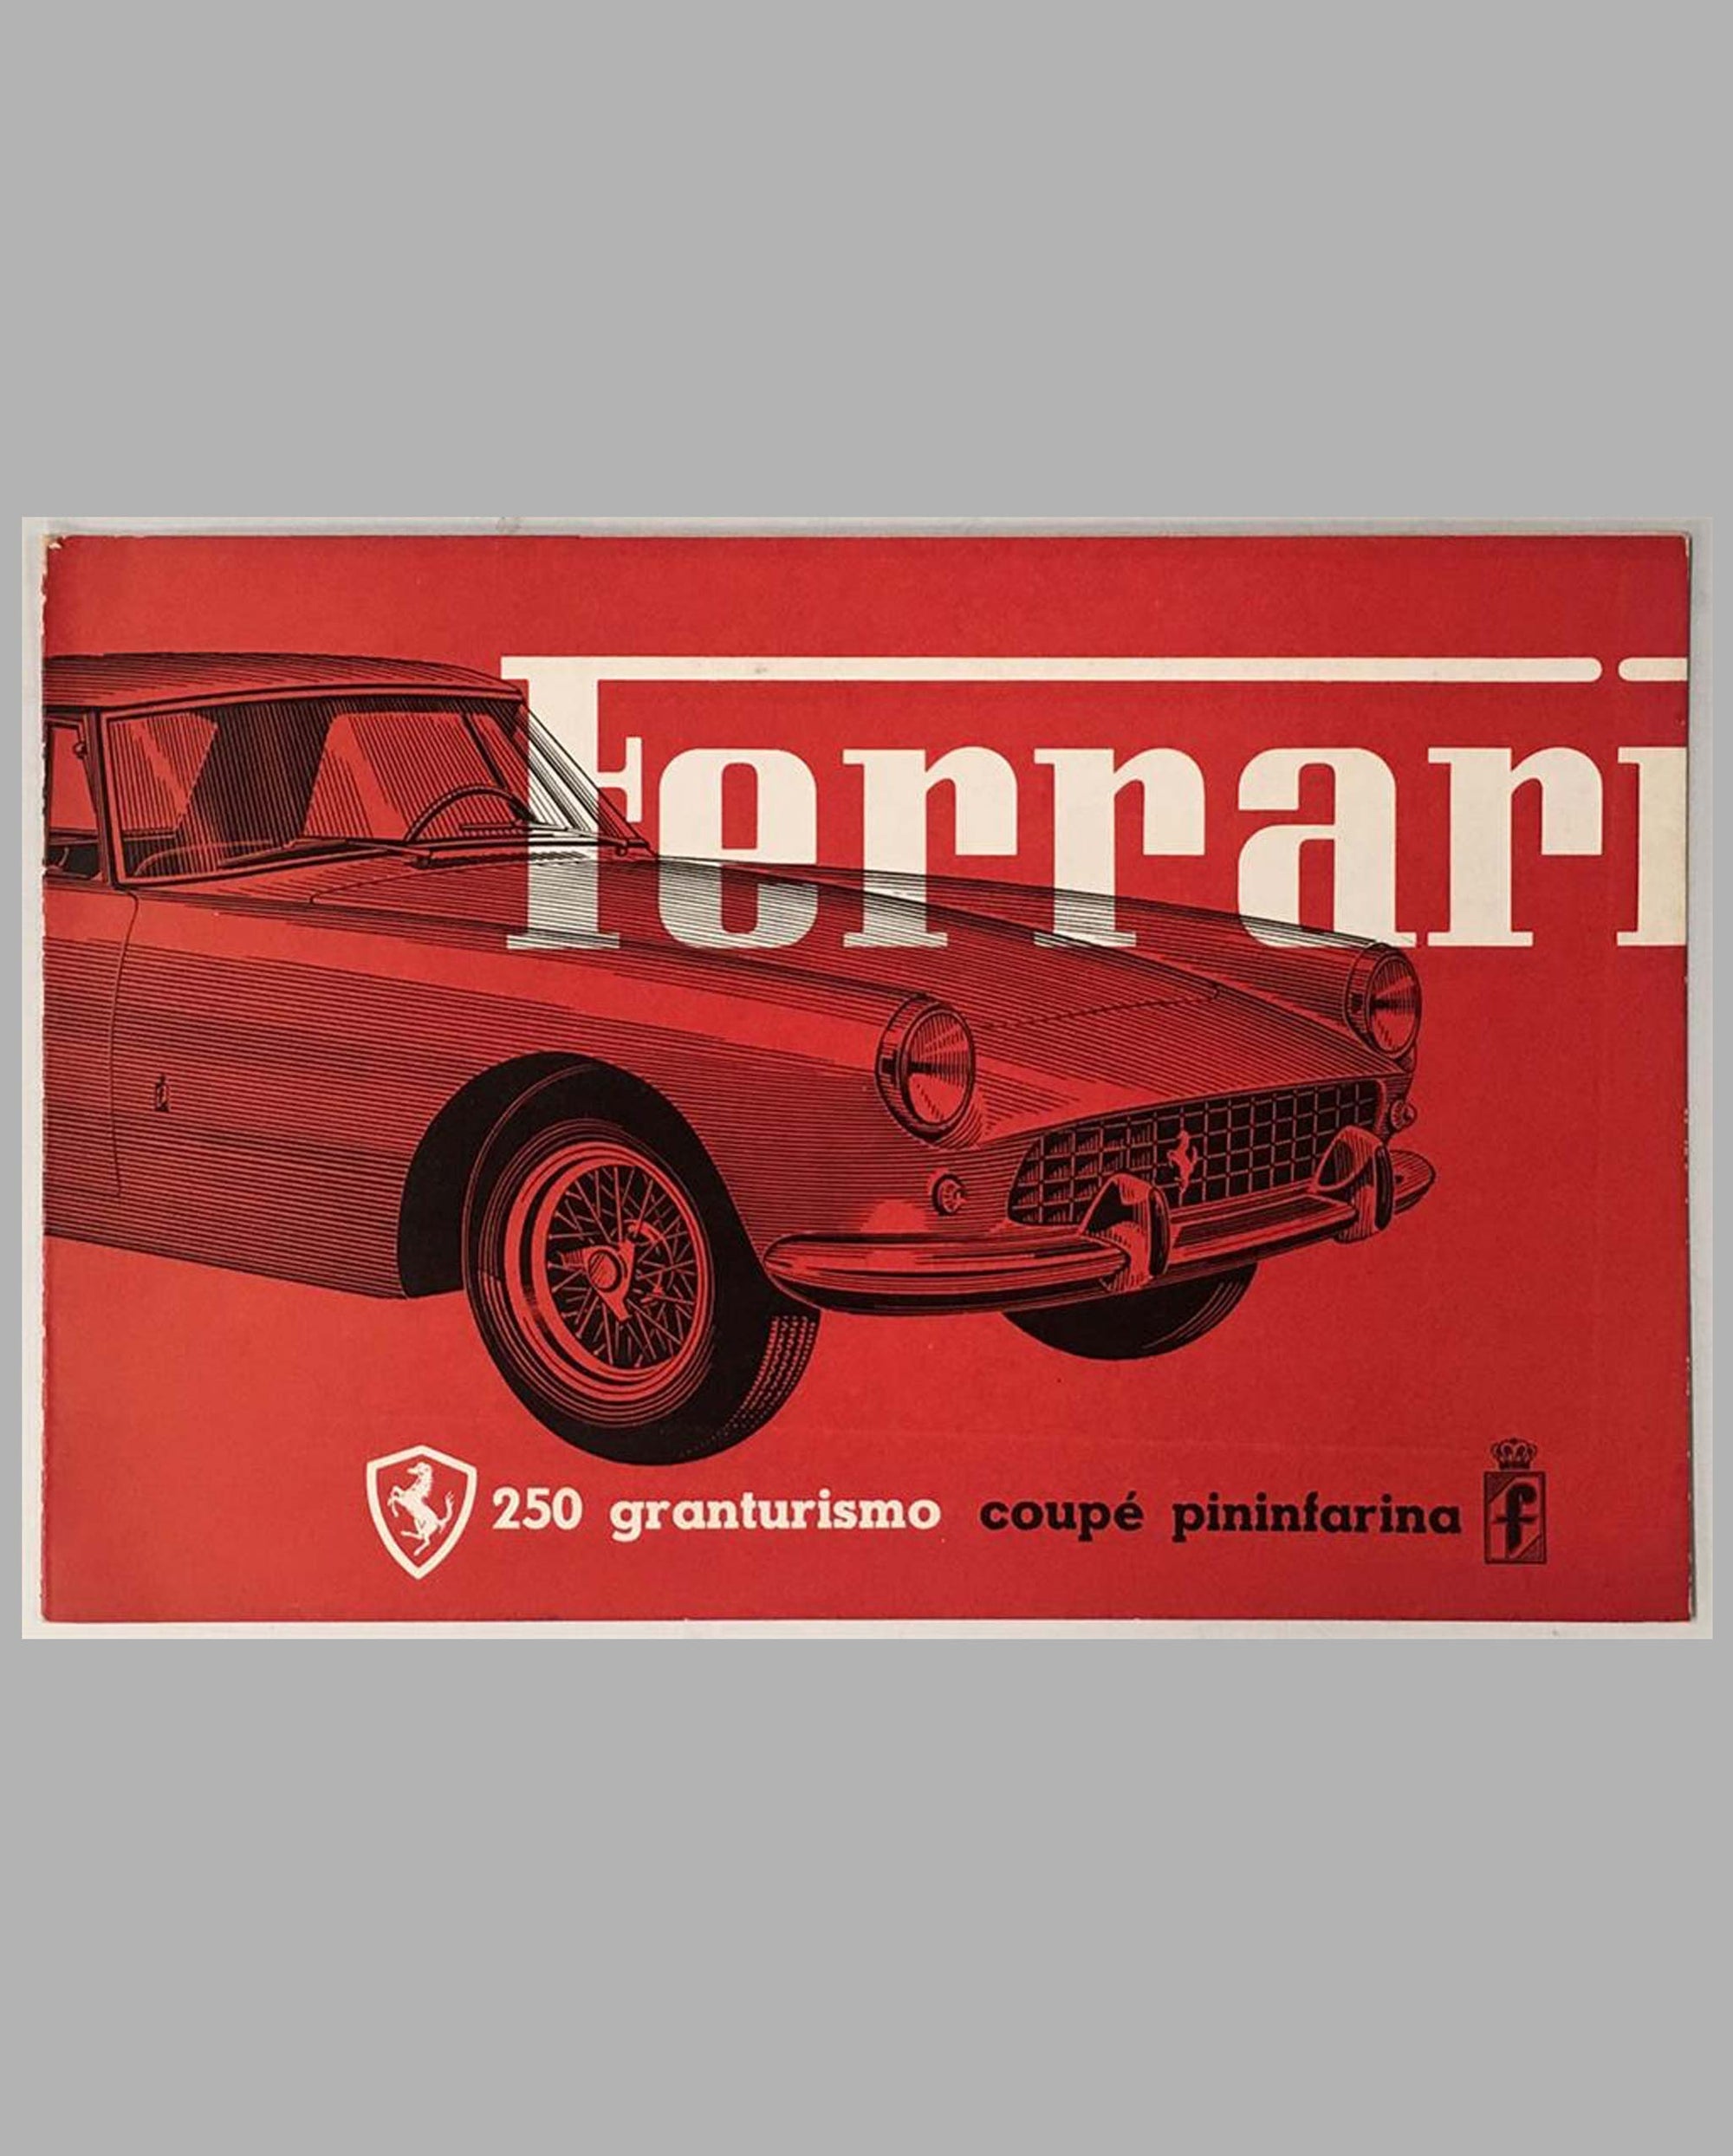 Ferrari 250 Granturismo Coupe Pininfarina original factory sales brochure, Cover